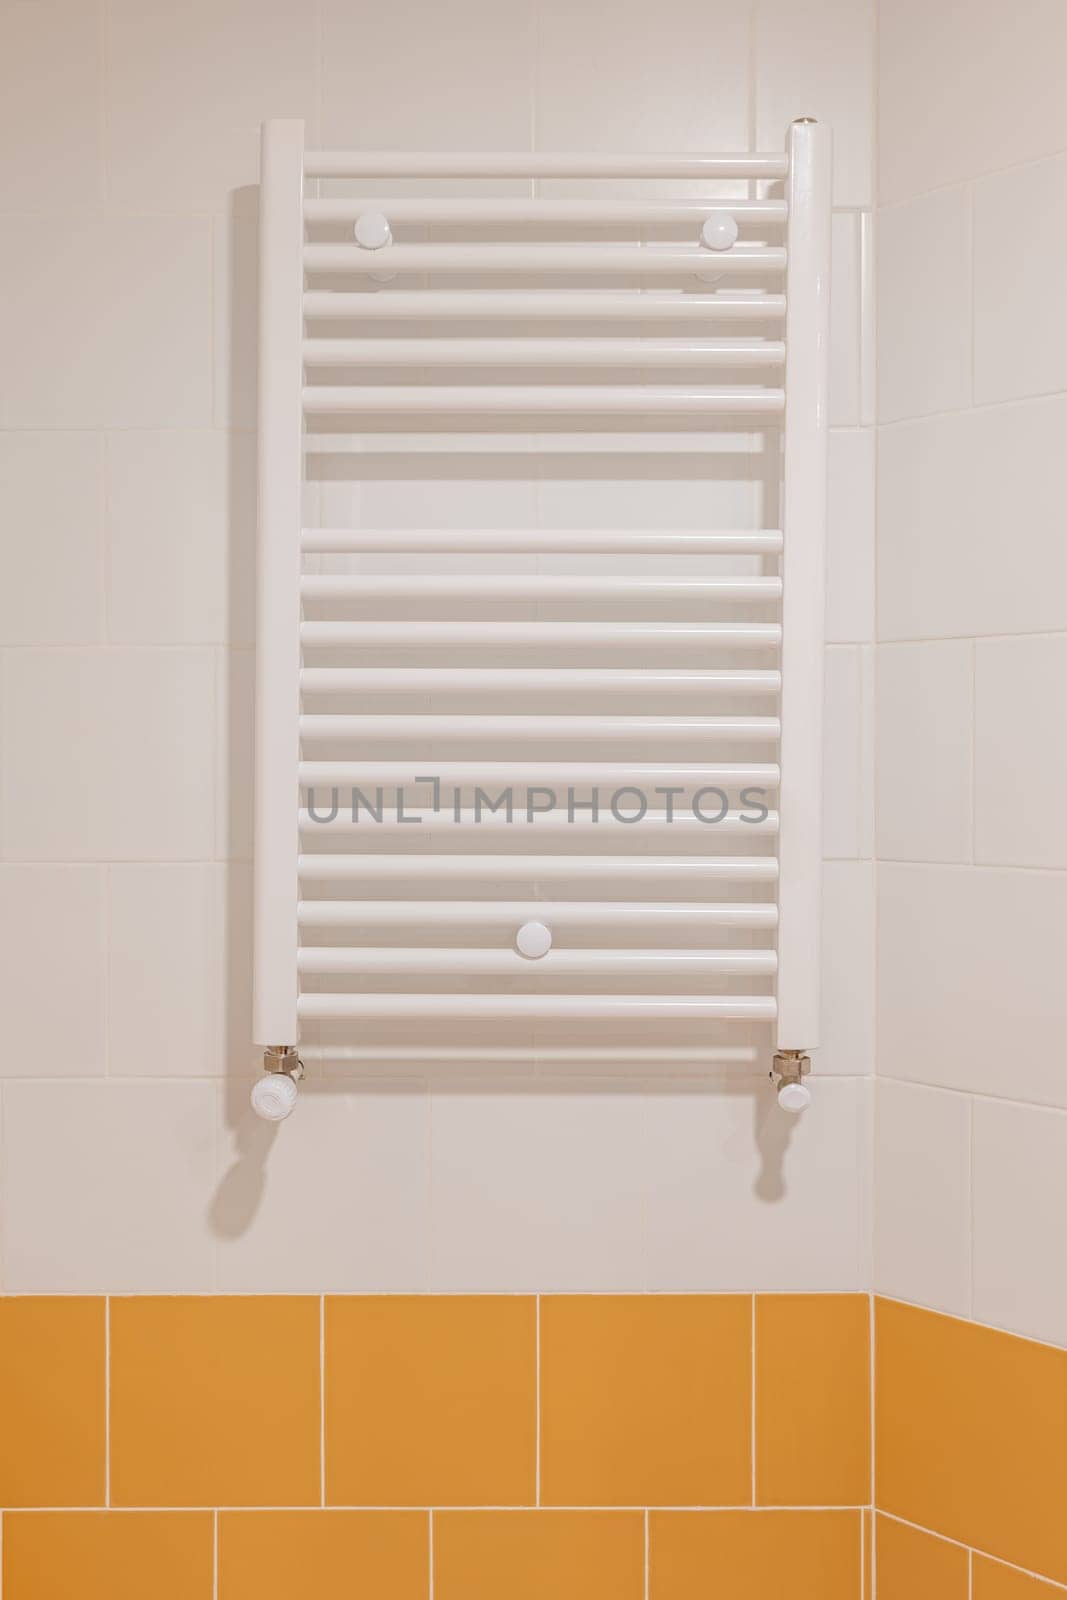 White bathroom radiator mounted on a half yellow, half white tiled wall